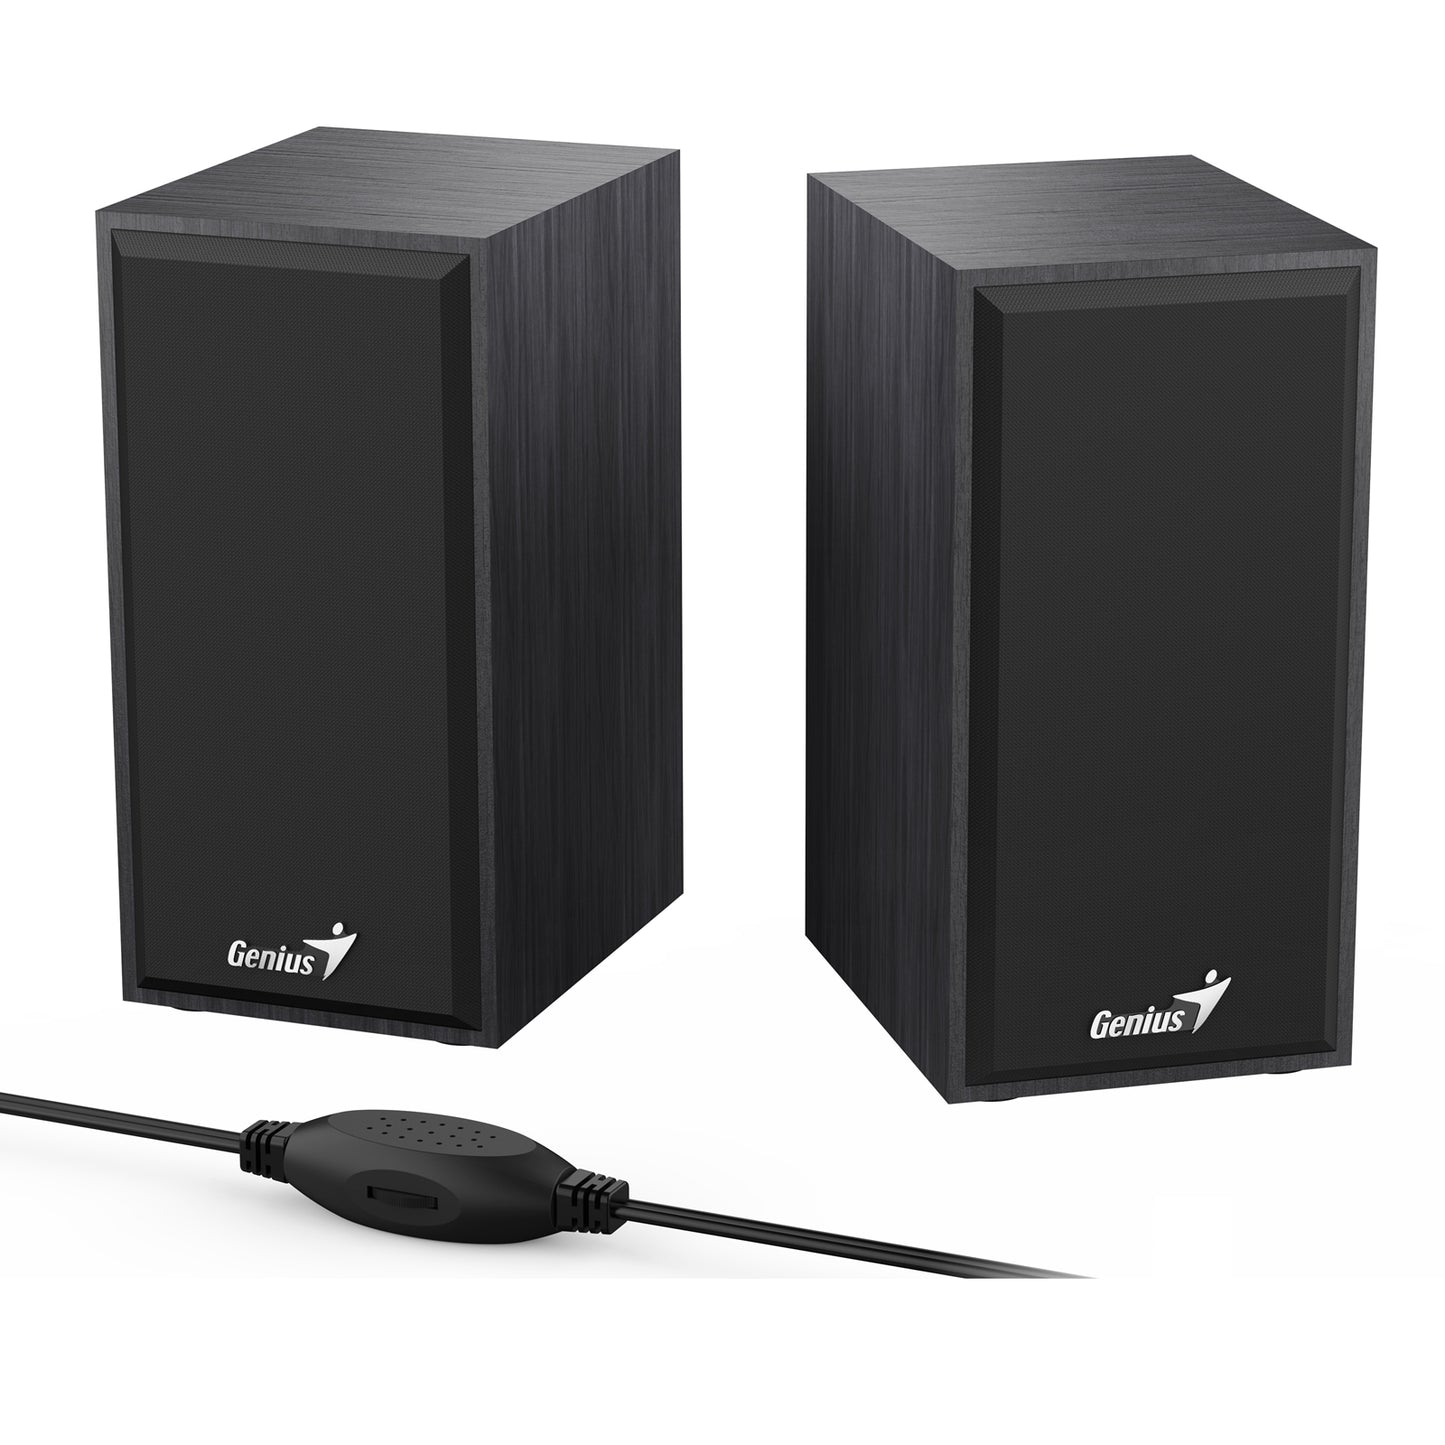 Genius SP-HF180 6W Wooden Desktop USB 2.0 Stereo Speakers with 3.5mm Audio Jack & Volume Control, Black